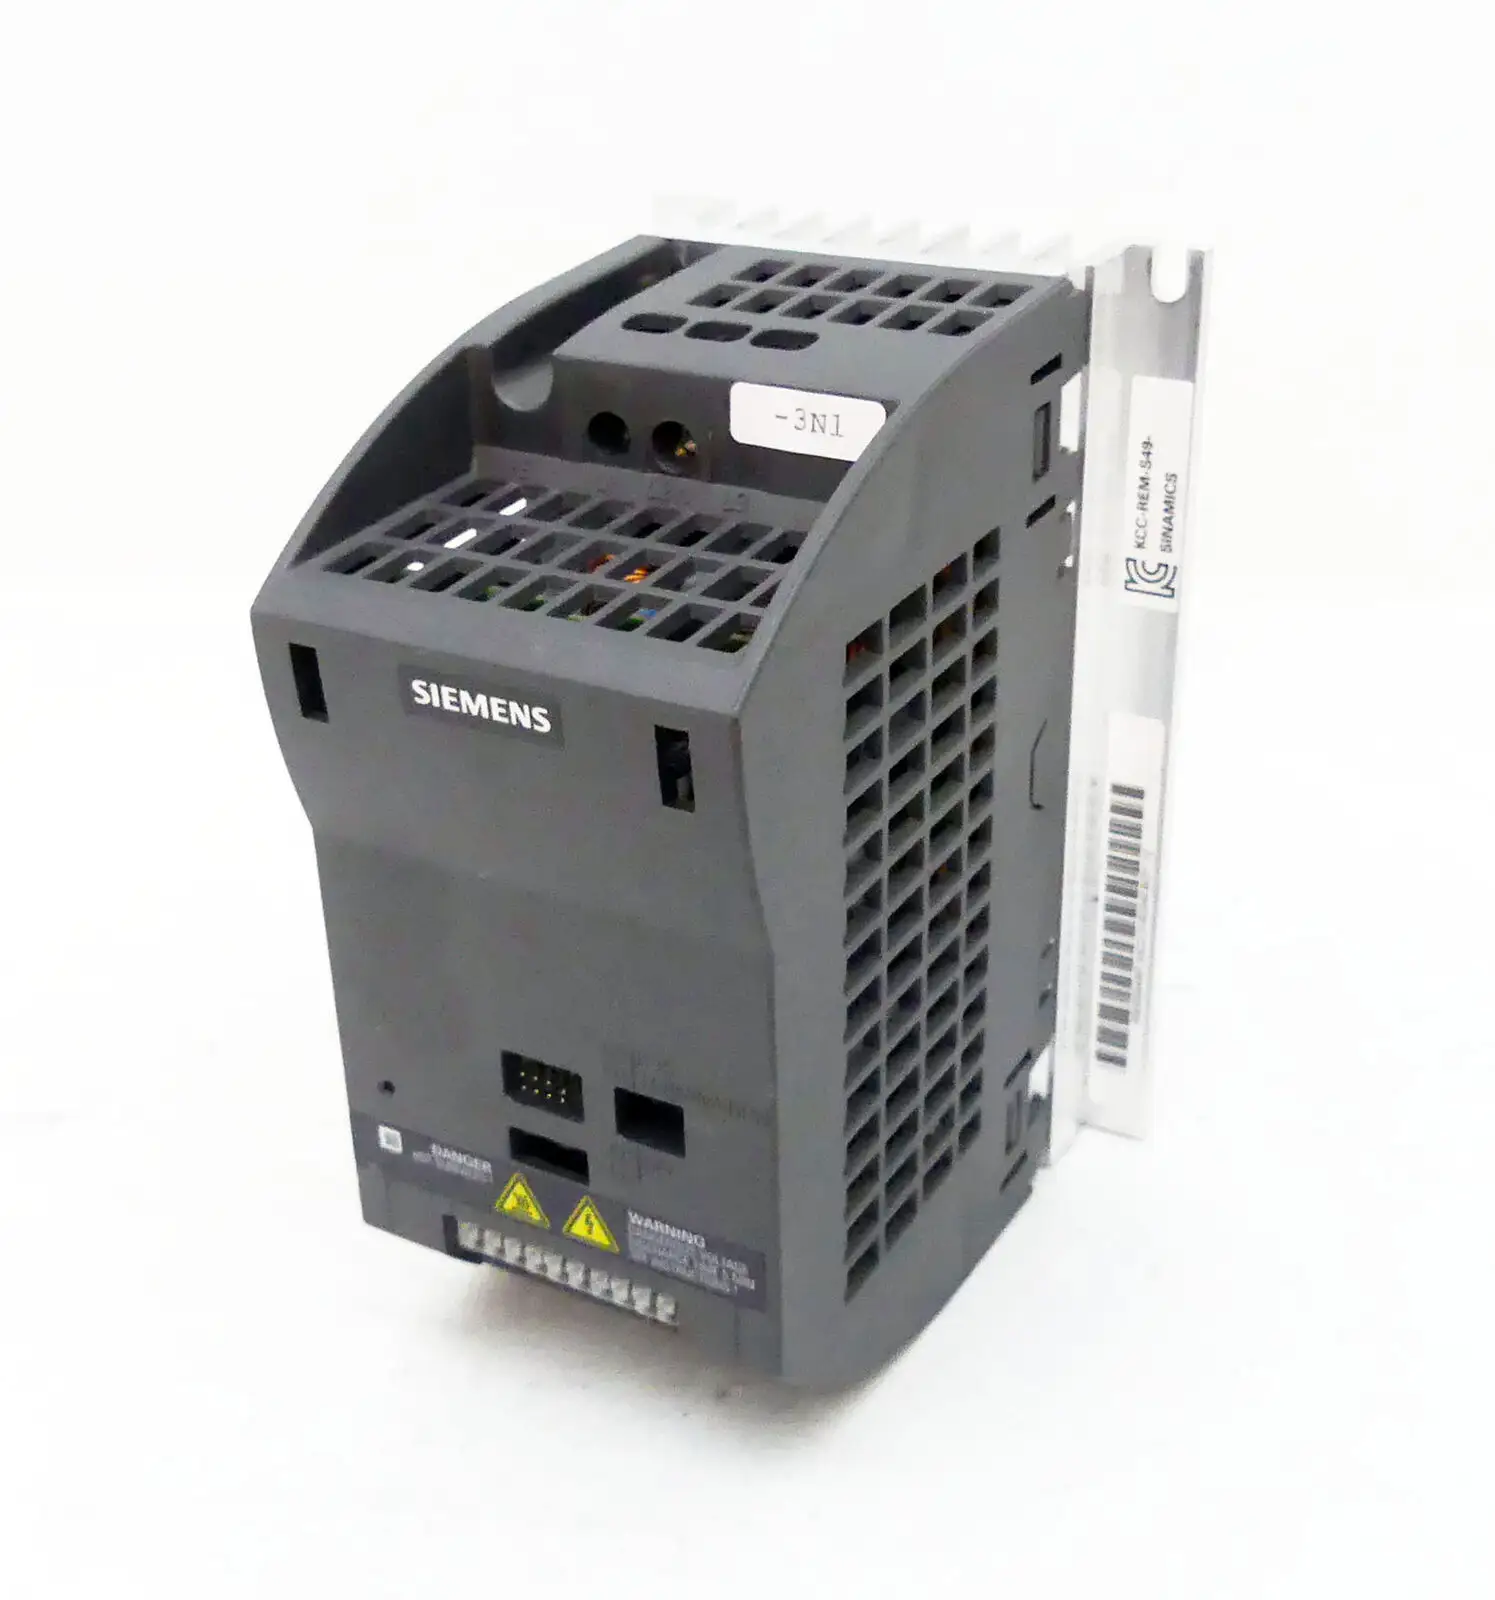 Siemens original «sinamics G110-CPM110 ac drive 1.5kw conversor de frequência»